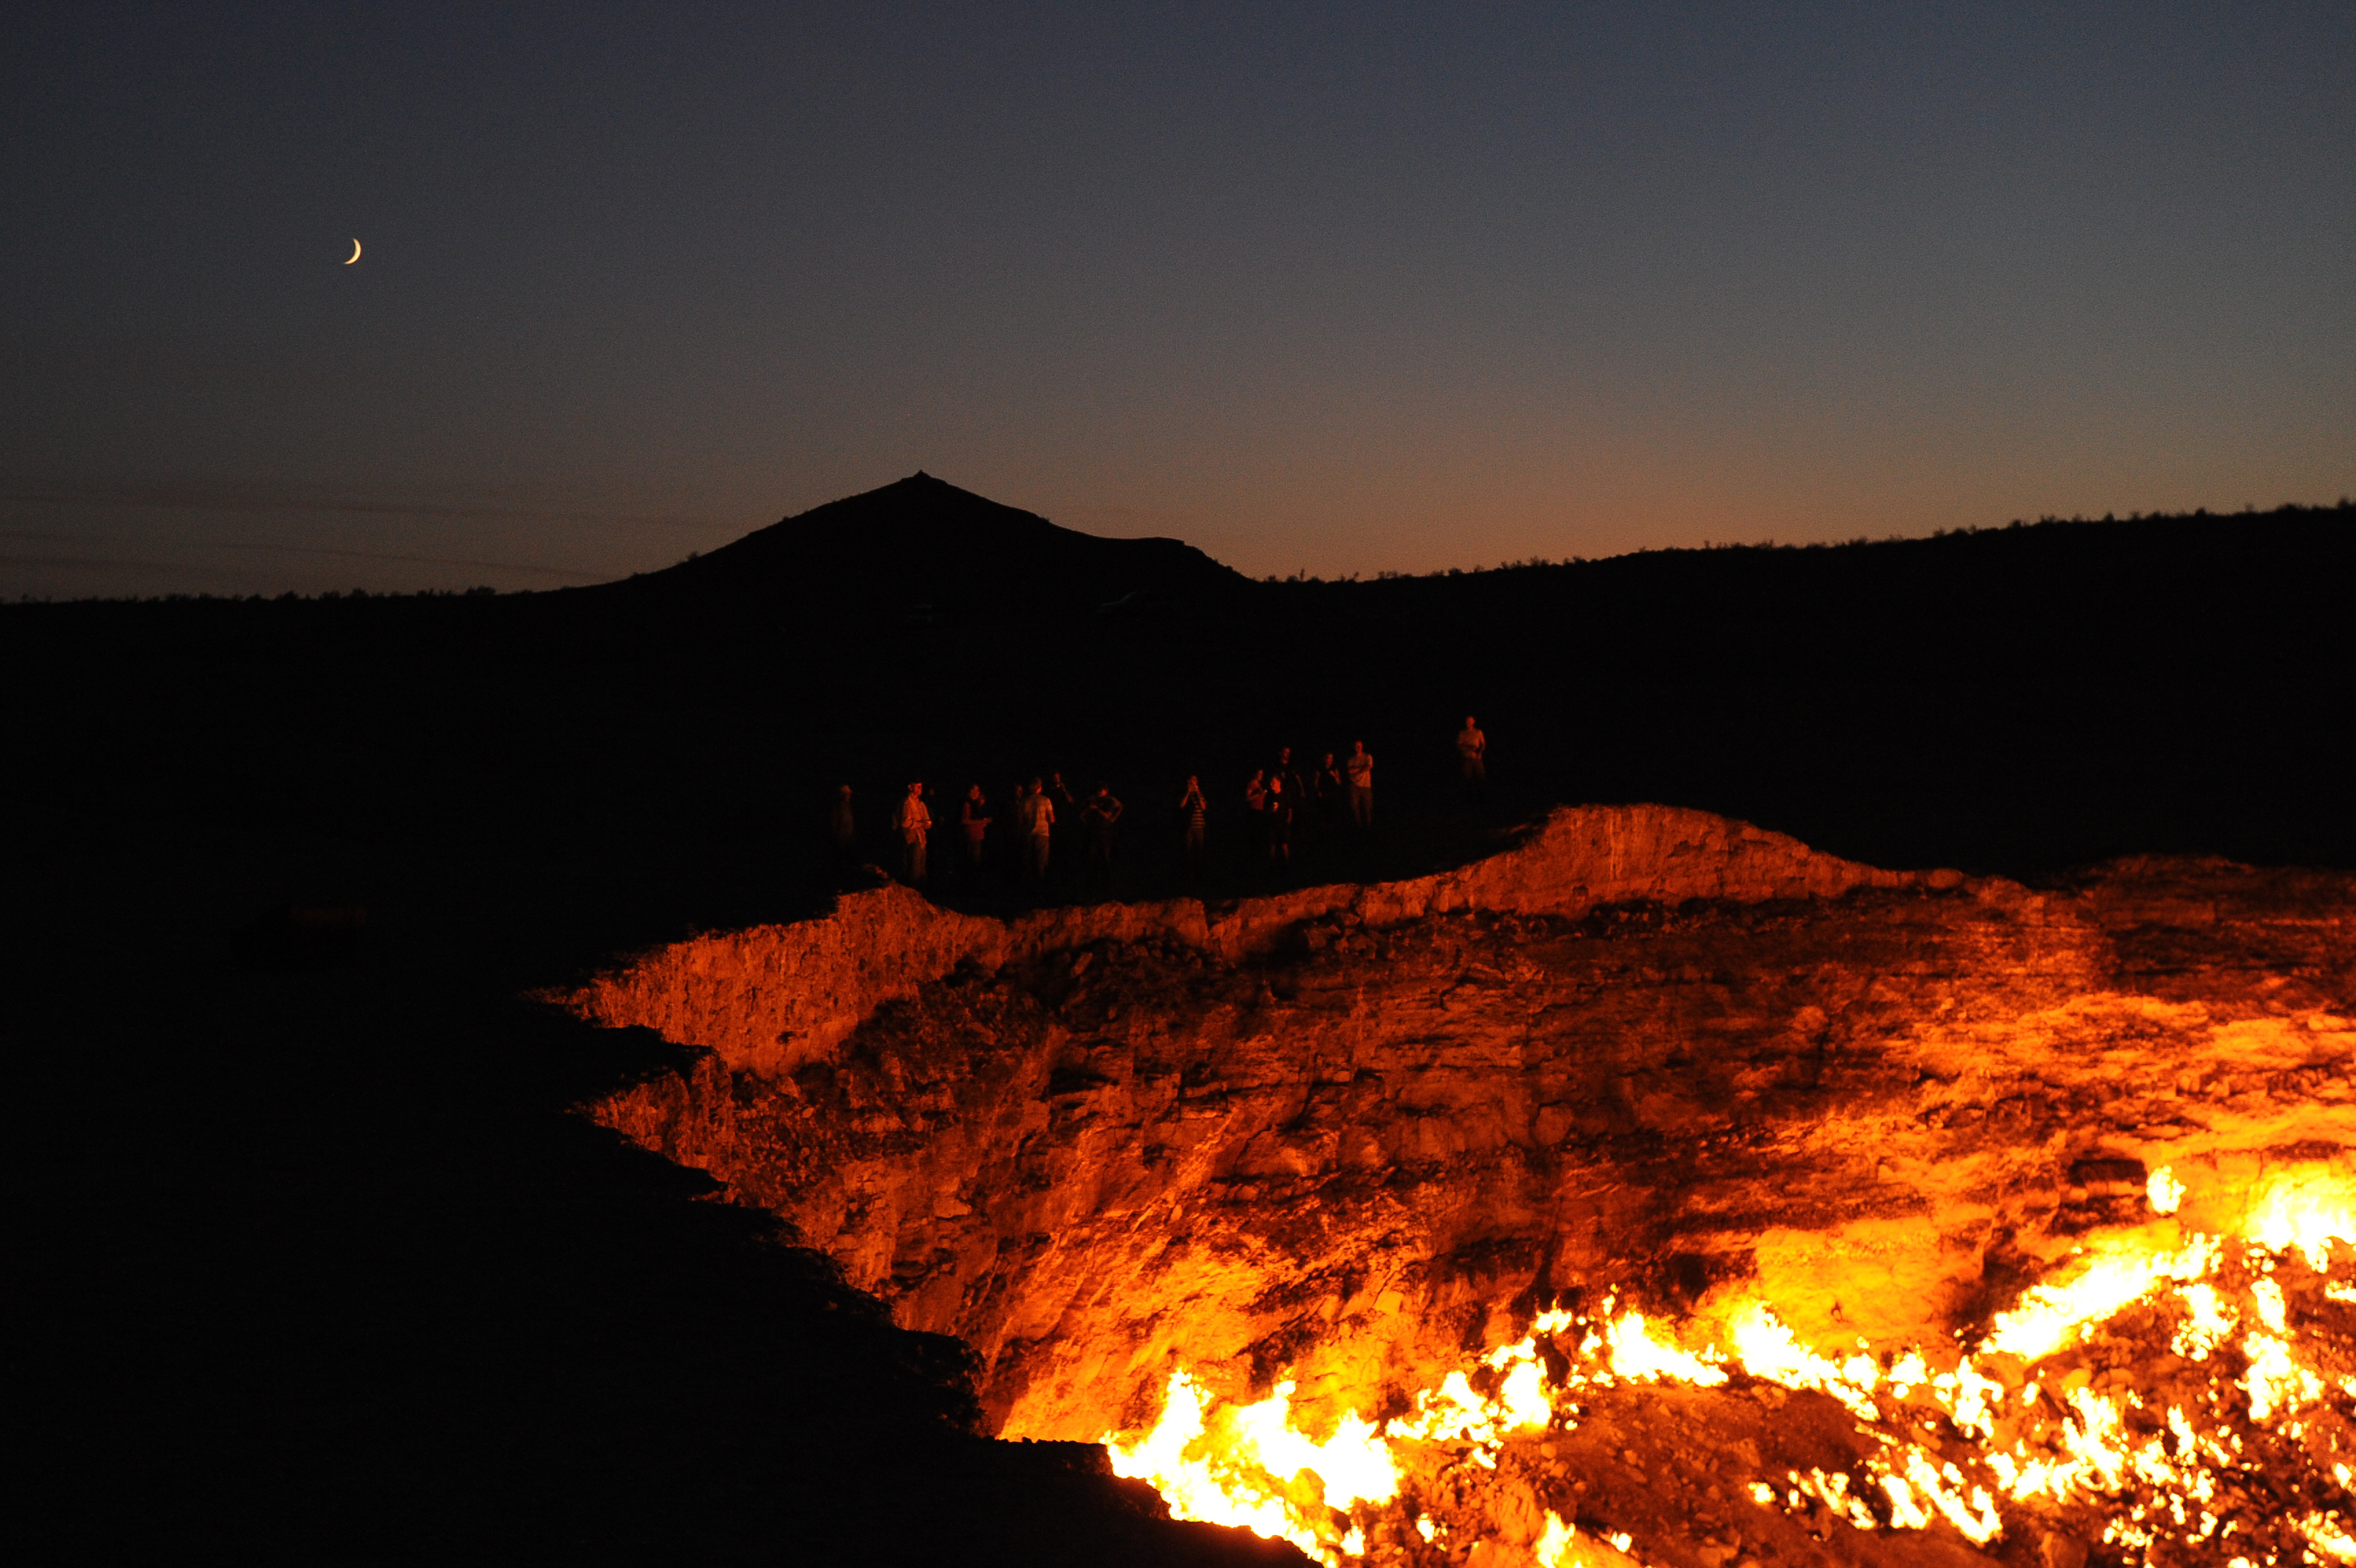    Дарвасский газовый кратер 1    от   Тормод Сандторв   -   Flickr   :   Дарвасский газовый кратер № 1   ,  Лицензировано под   CC BY-SA 2